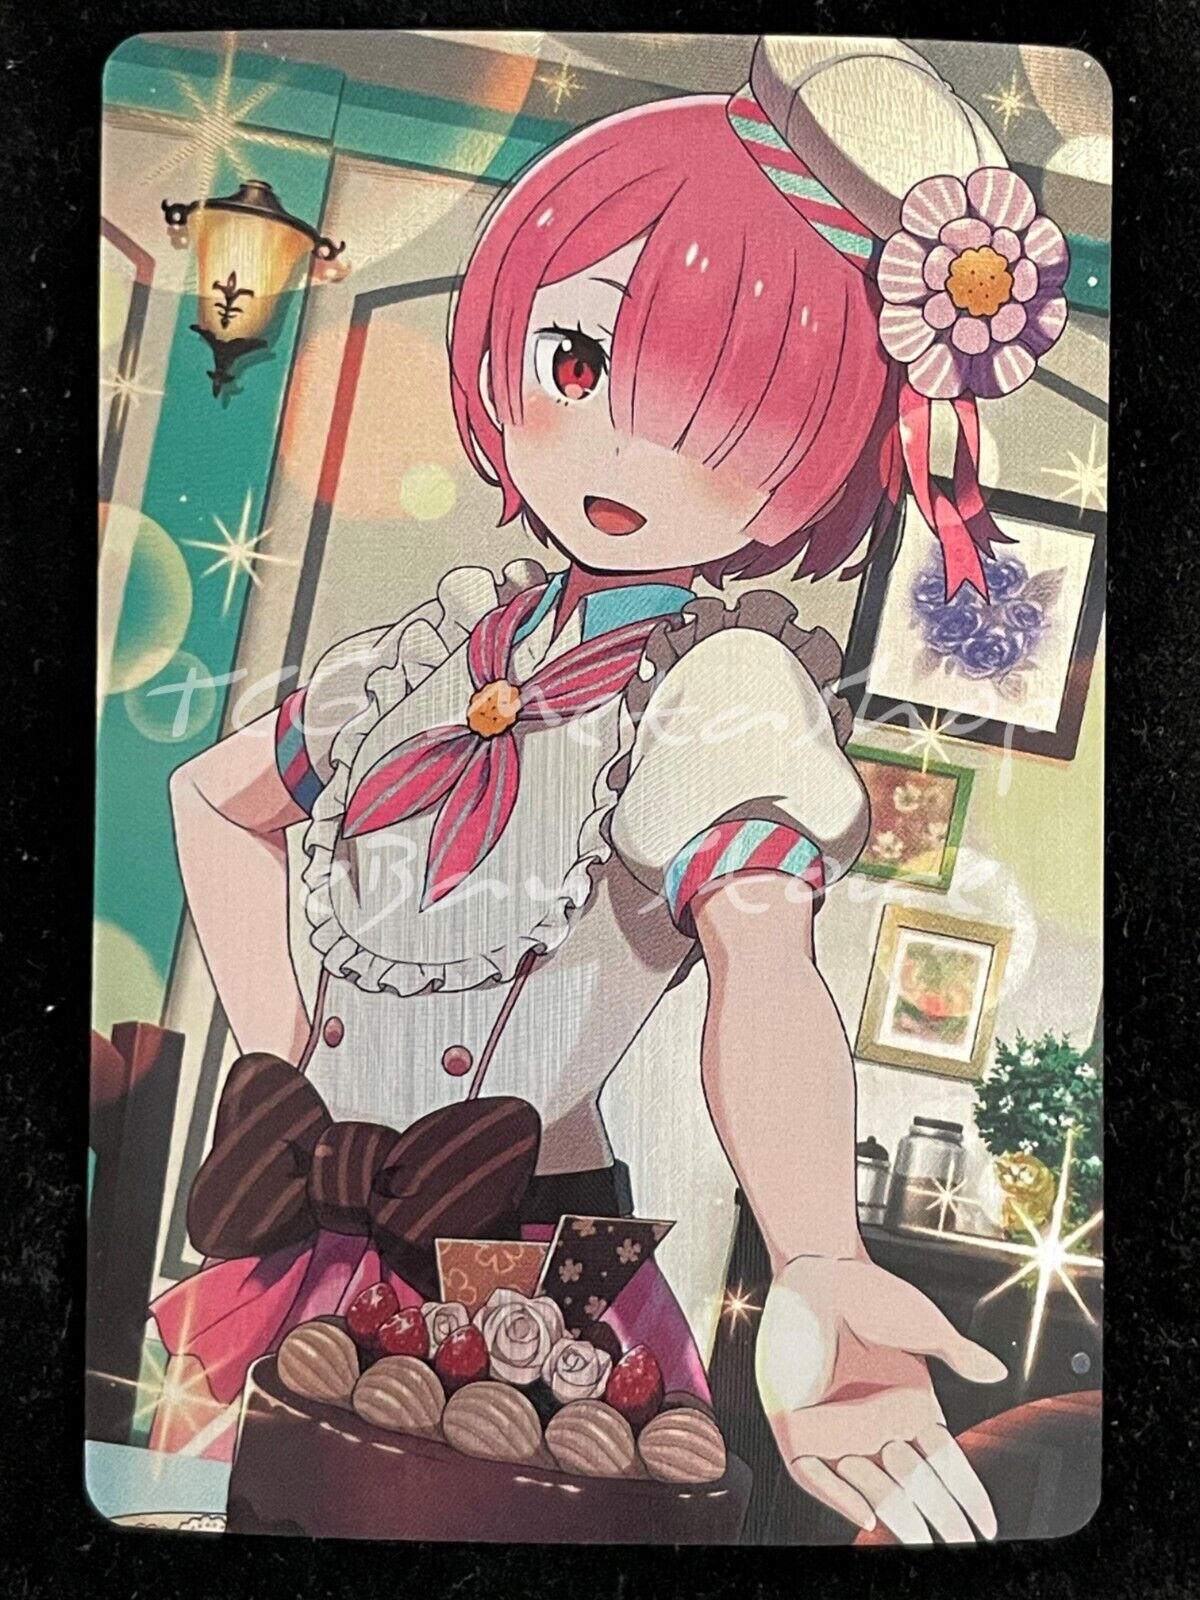 🔥 Ram Re:Zero Goddess Story Anime Card ACG # 2154 🔥